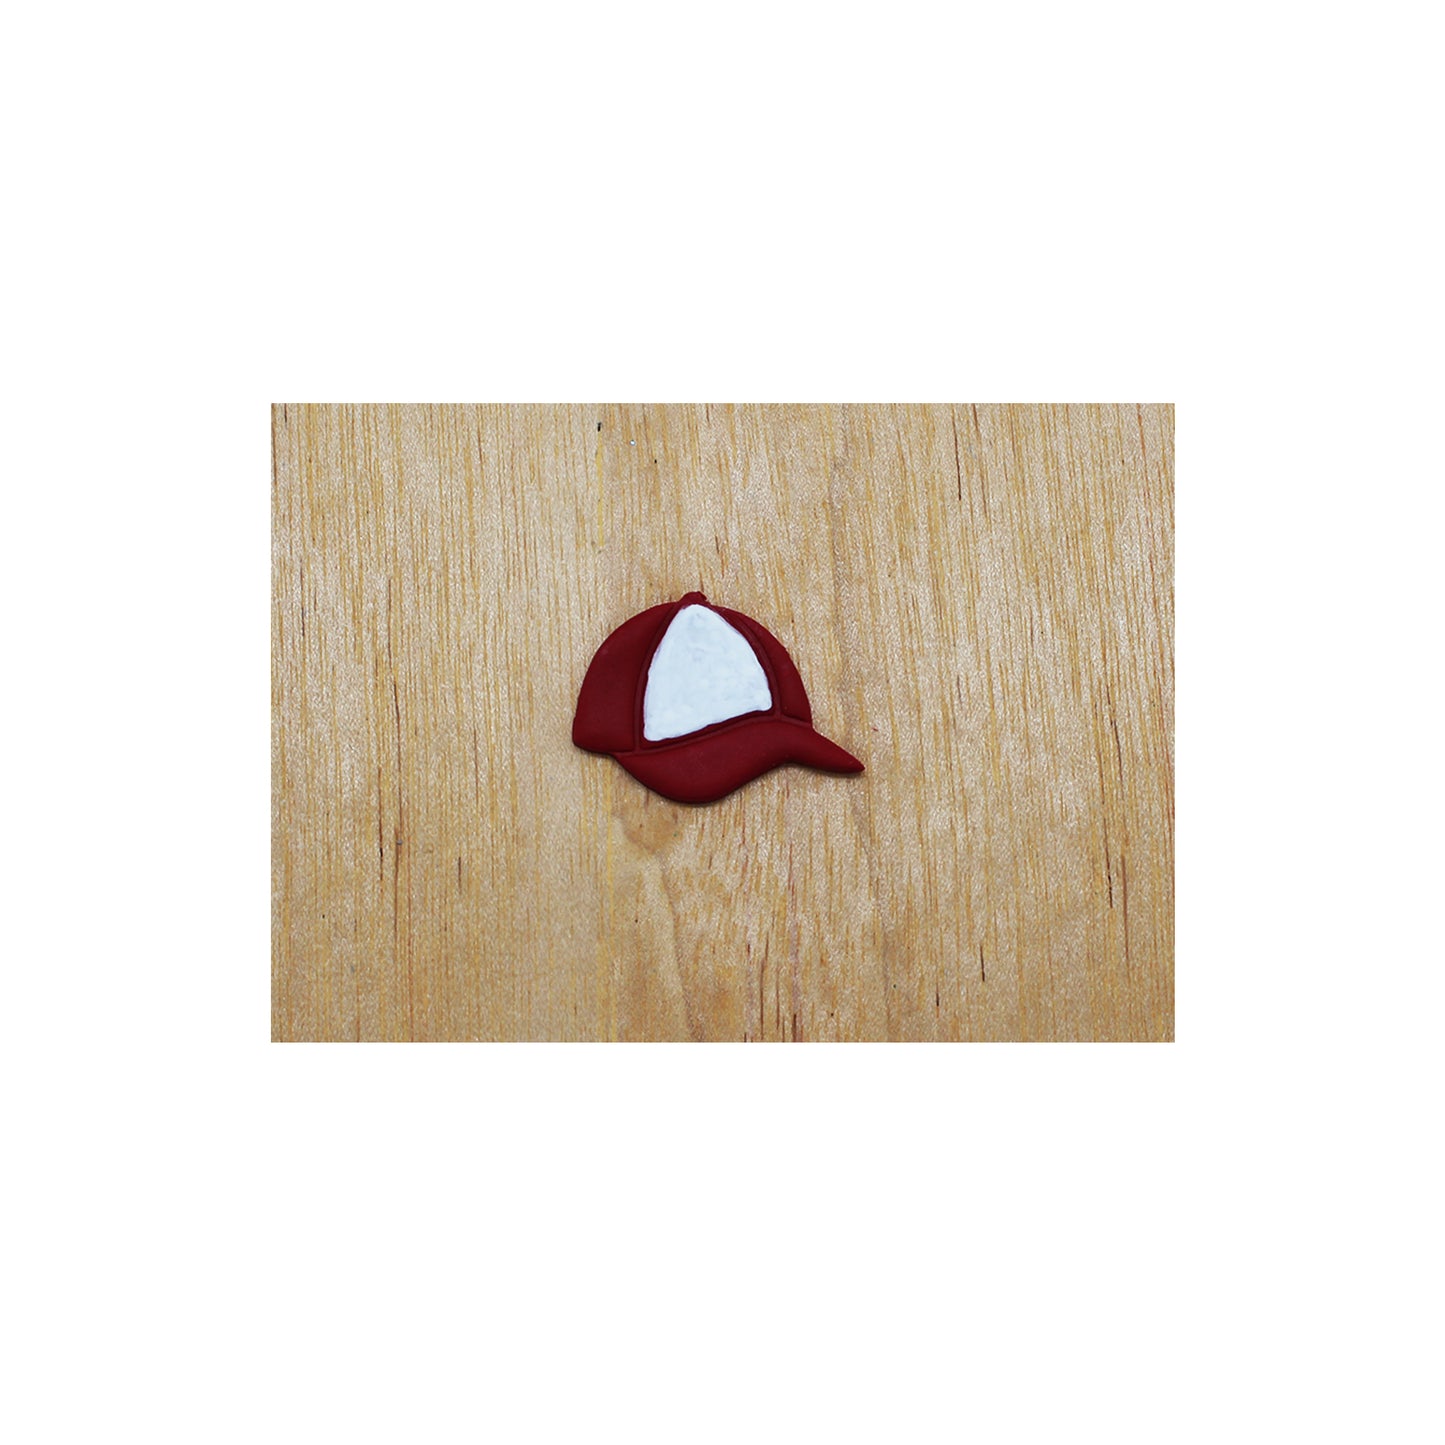 Baseball Cap Cookie Cutter for Cookies, Ceramics, Pottery, Polymer Clay, Fondant - Multi-Medium Craft & Baking Tool